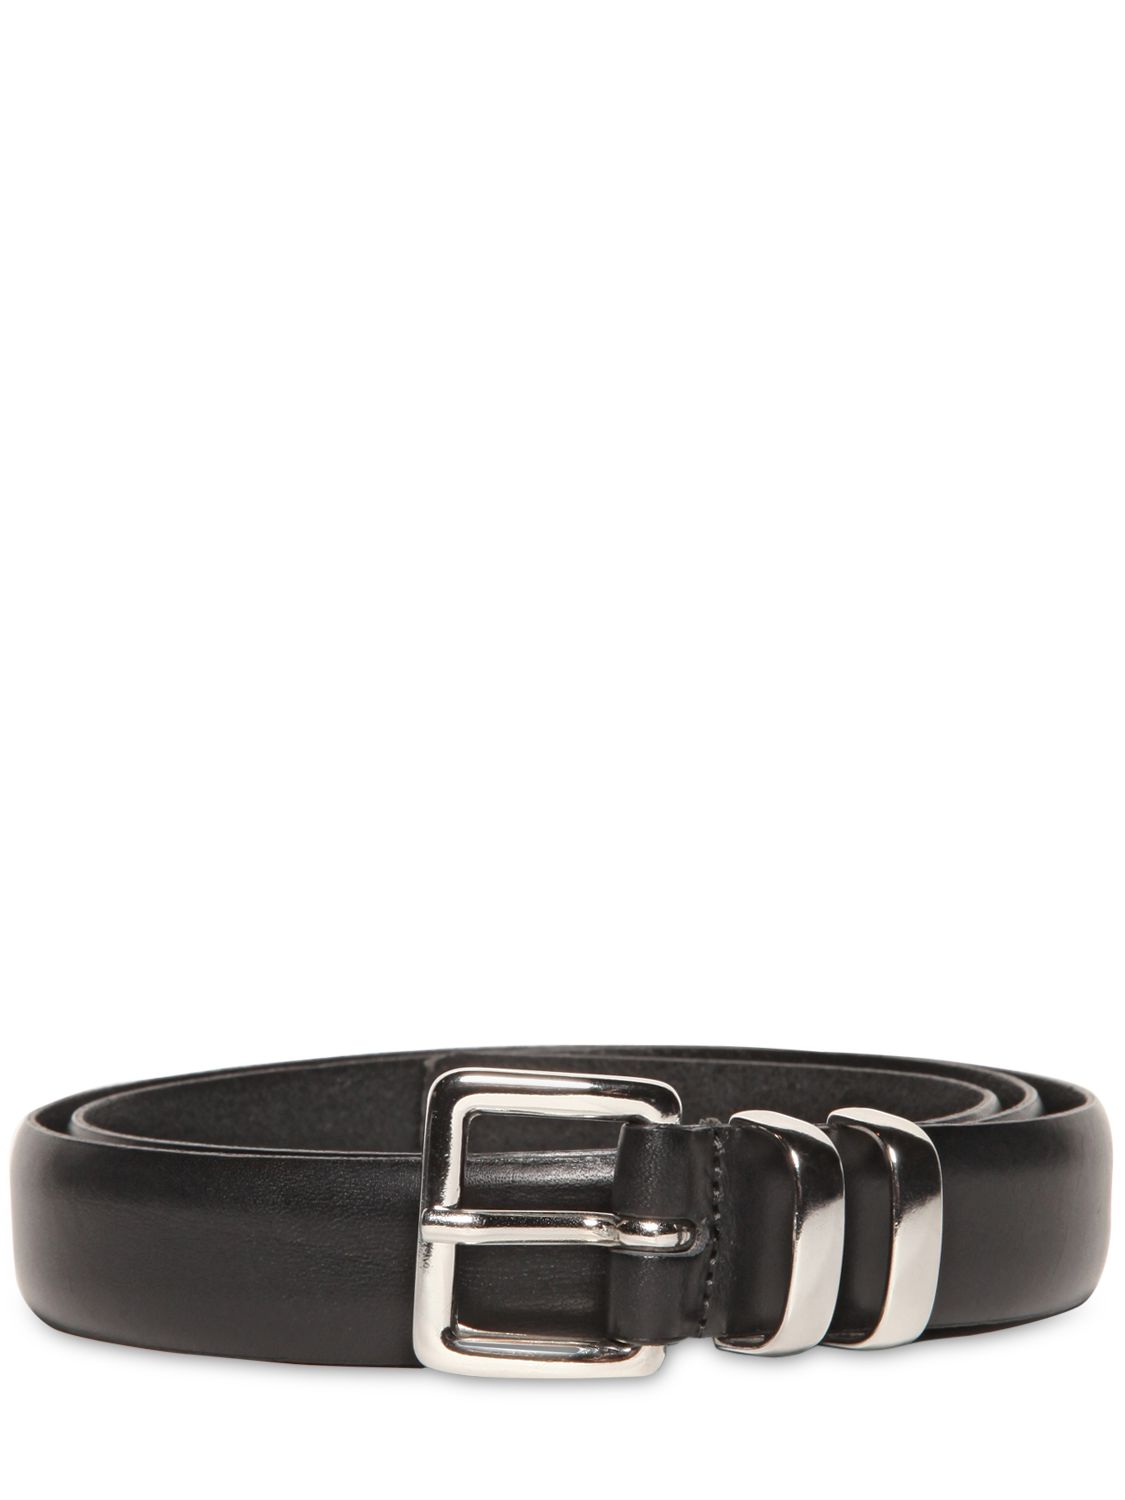 Lyst - The Kooples Smooth Leather Belt in Black for Men